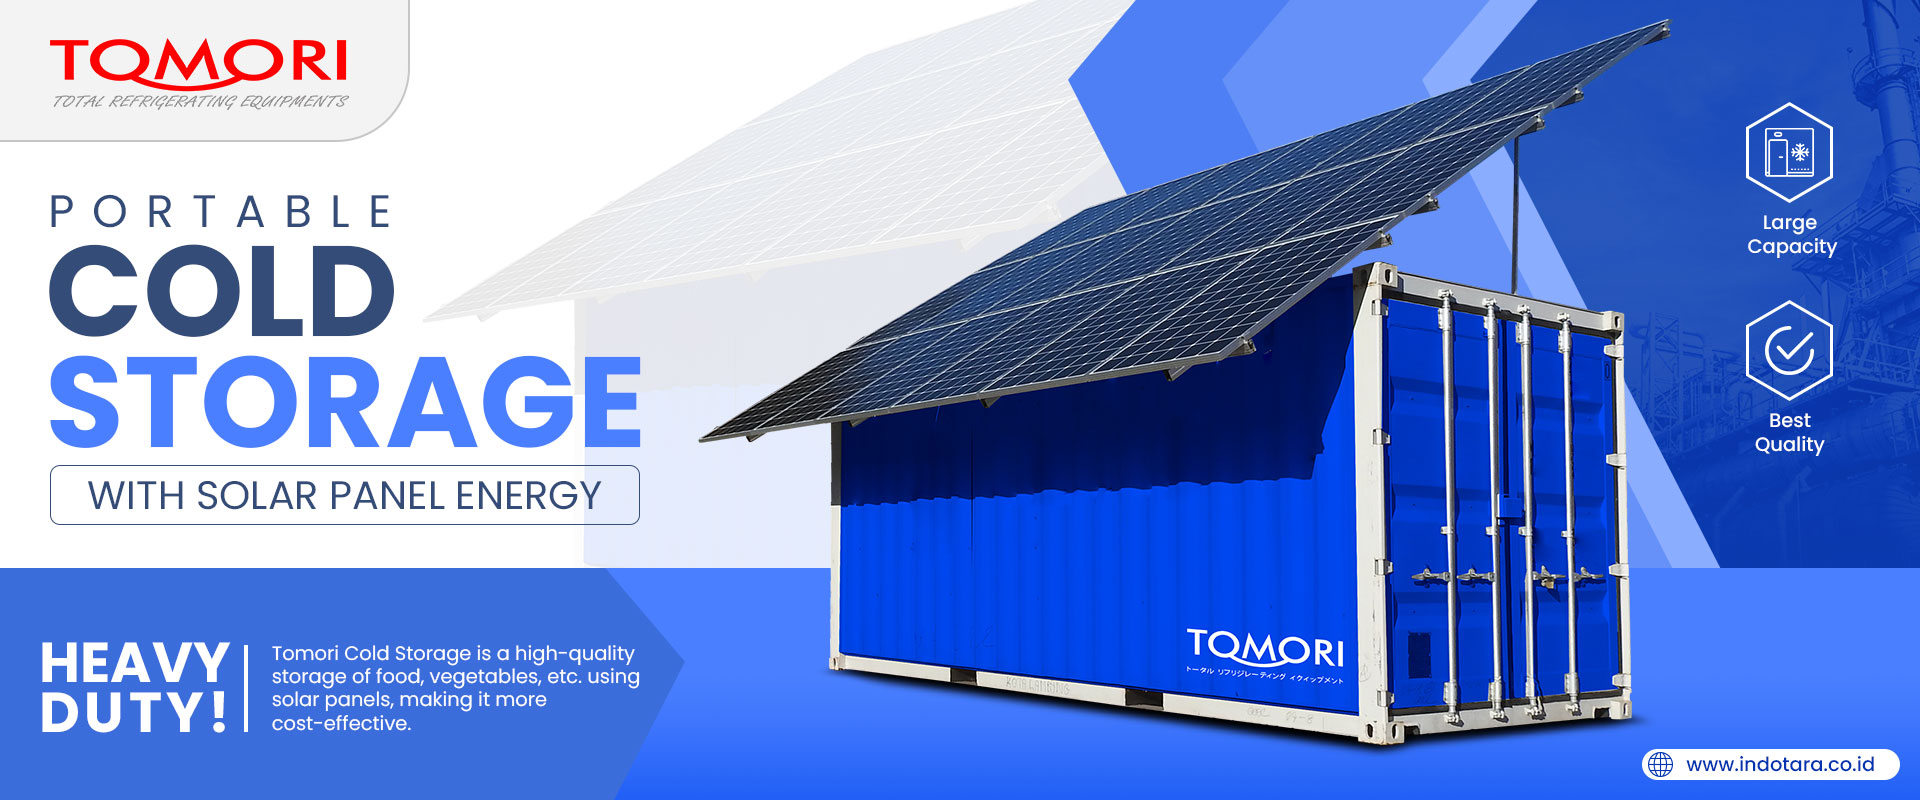 Jual Tomori Portable Cold Storage With Solar Panel